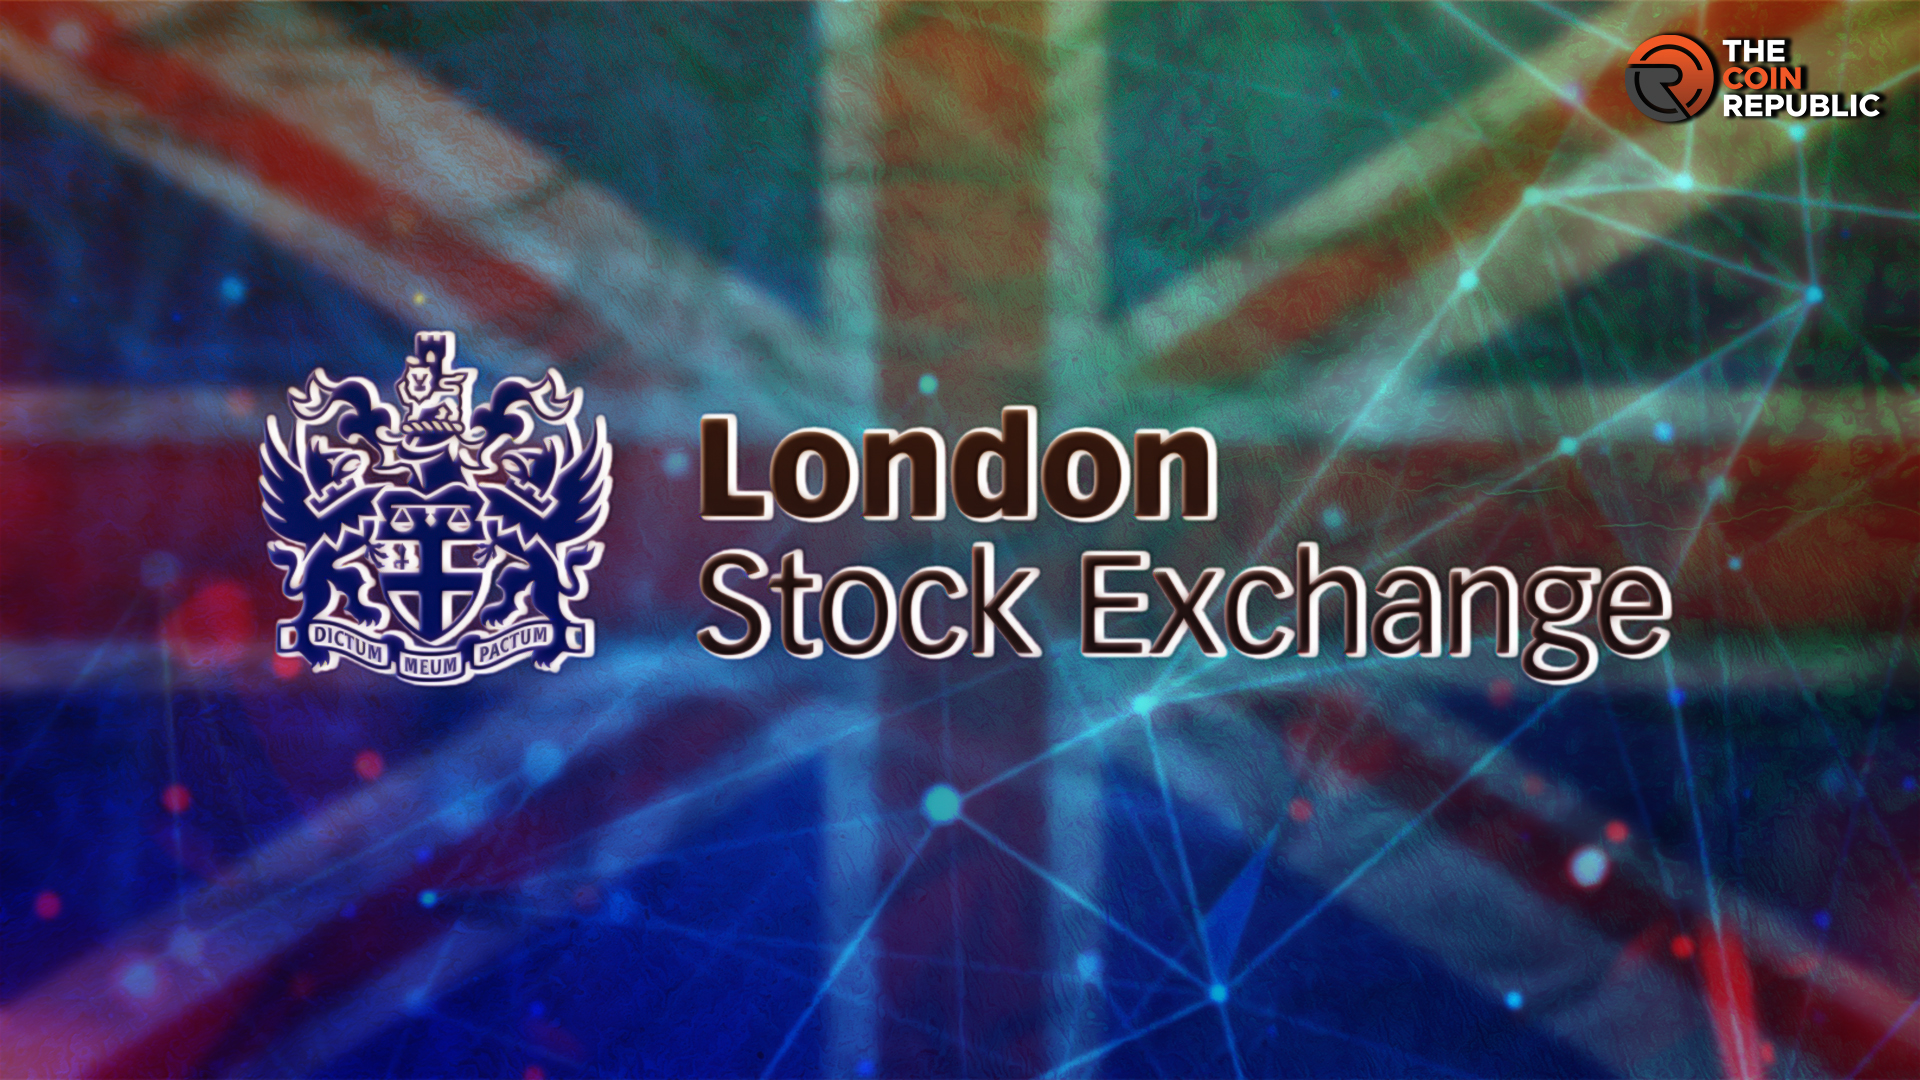 London Stock Exchange’s Blockchain Revolution in Traditional Asset Trading